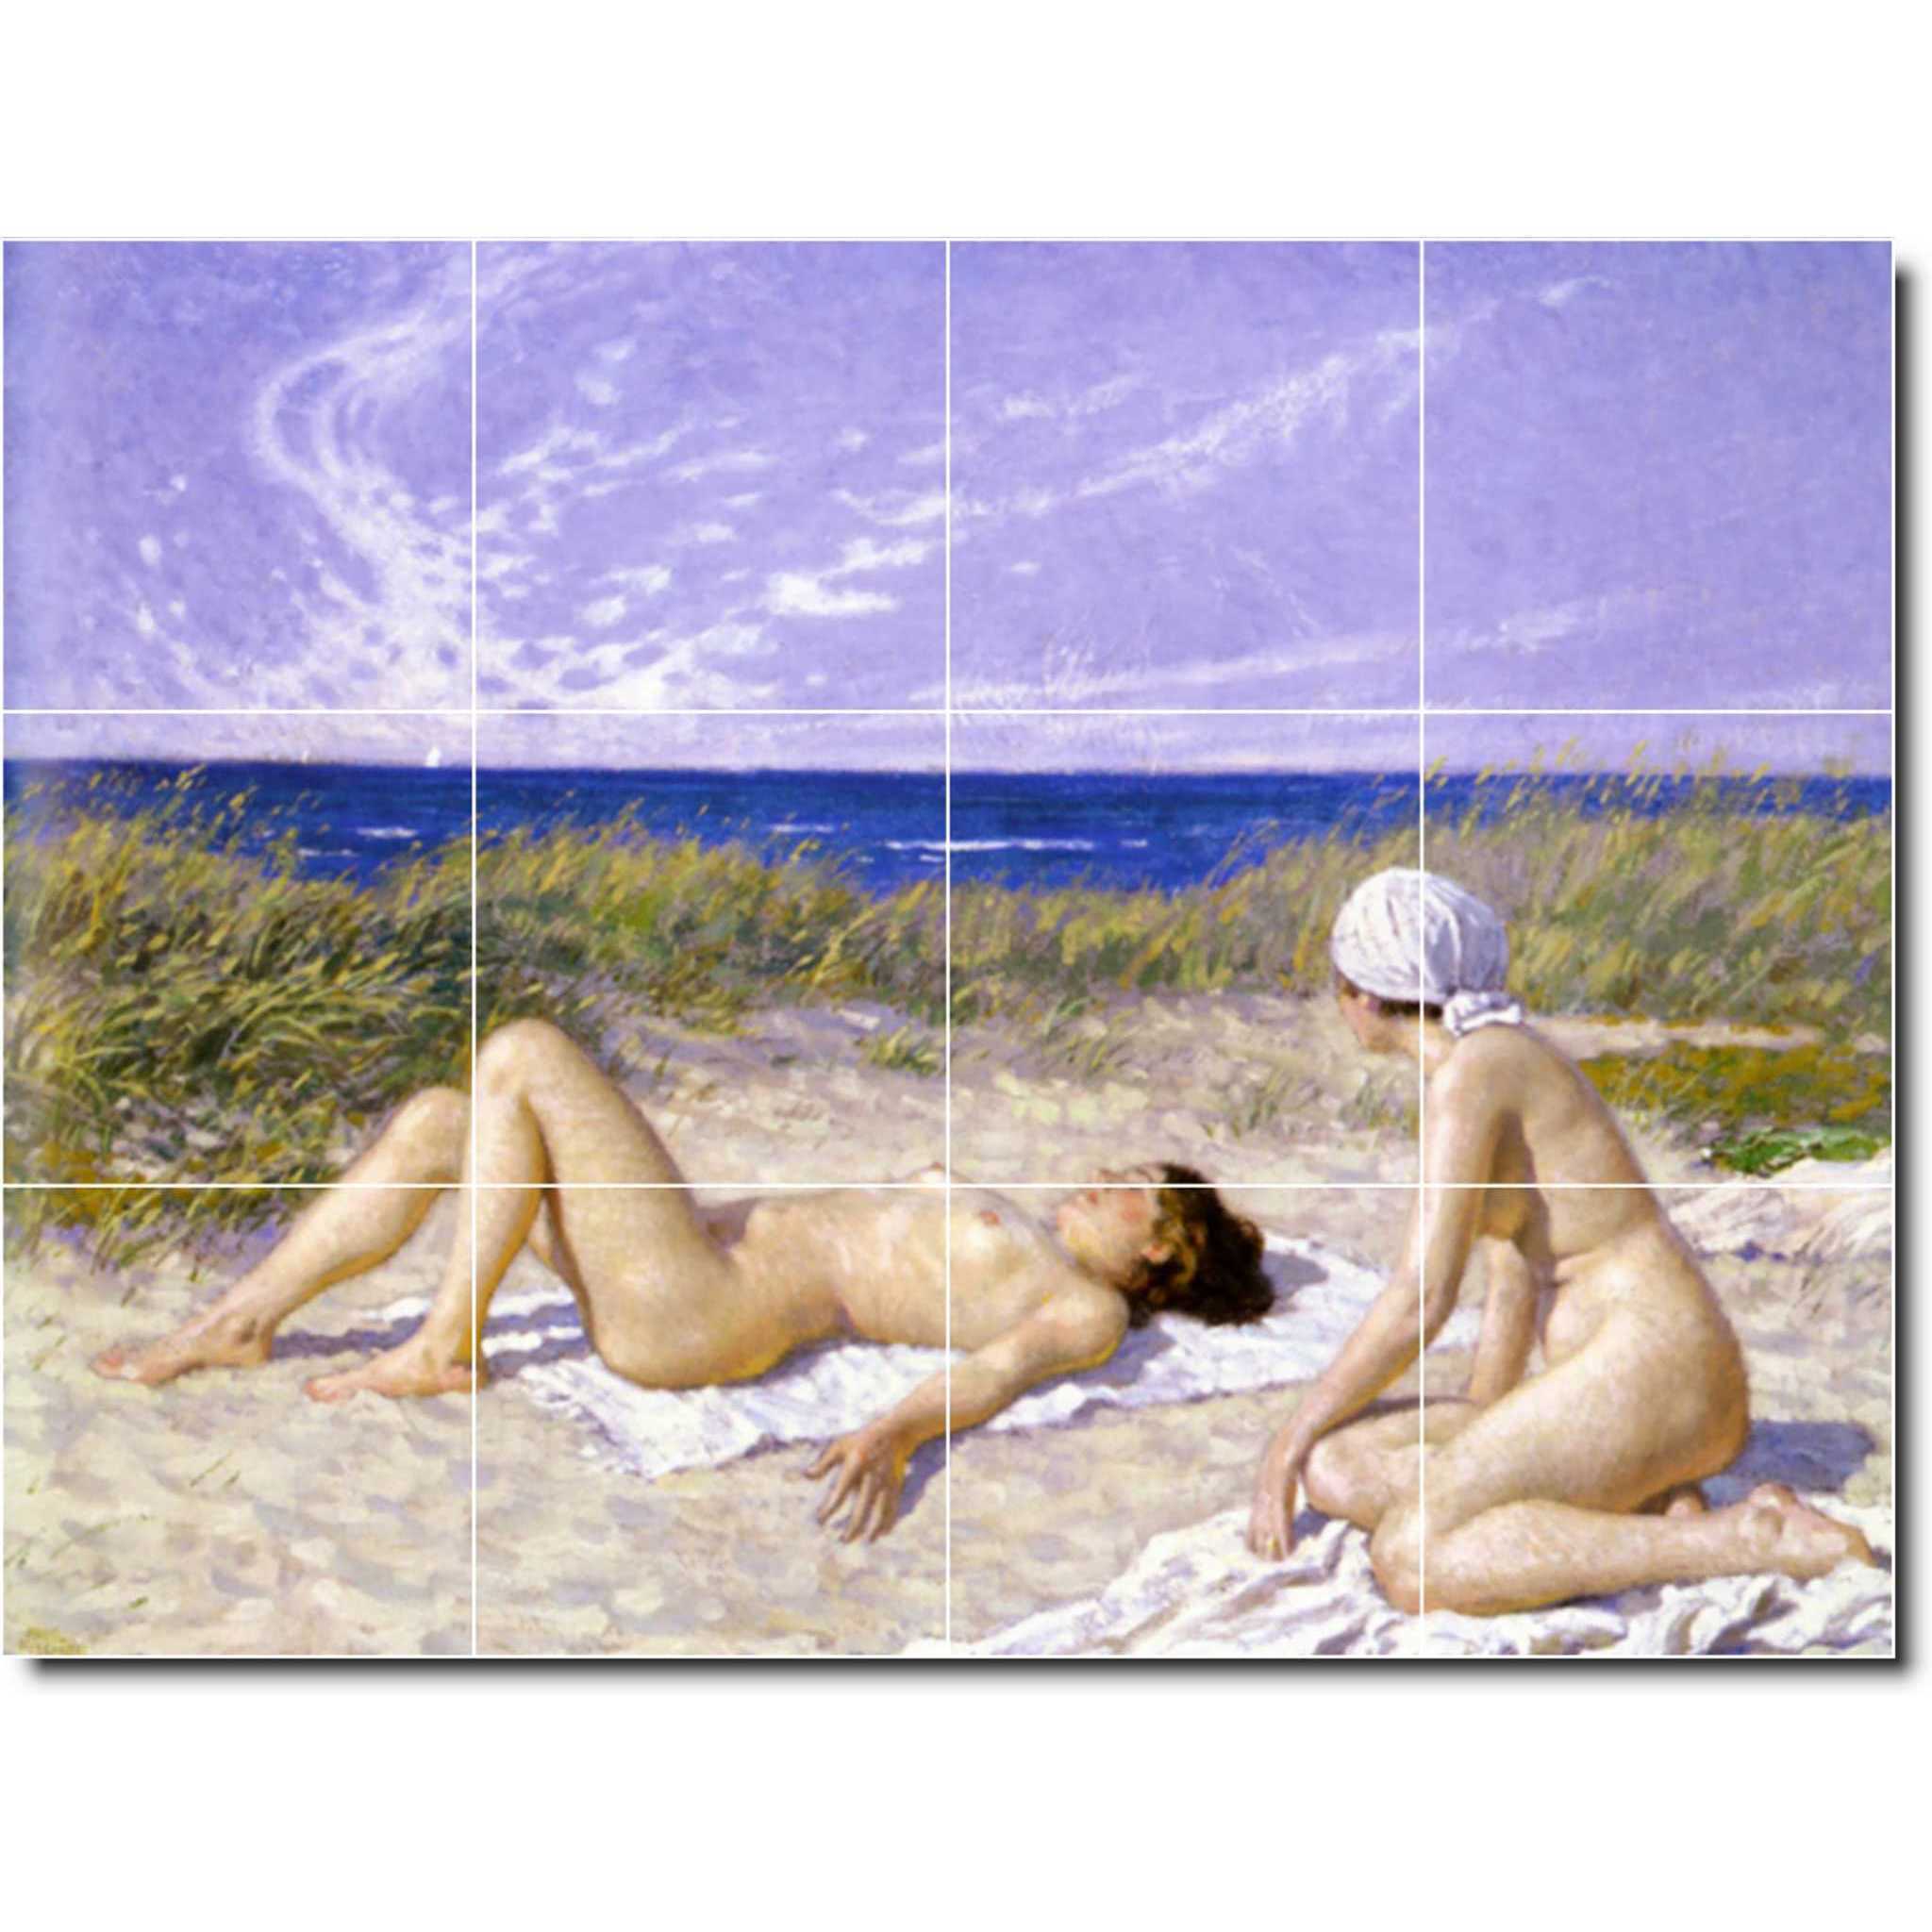 paul fischer nude painting ceramic tile mural p03278